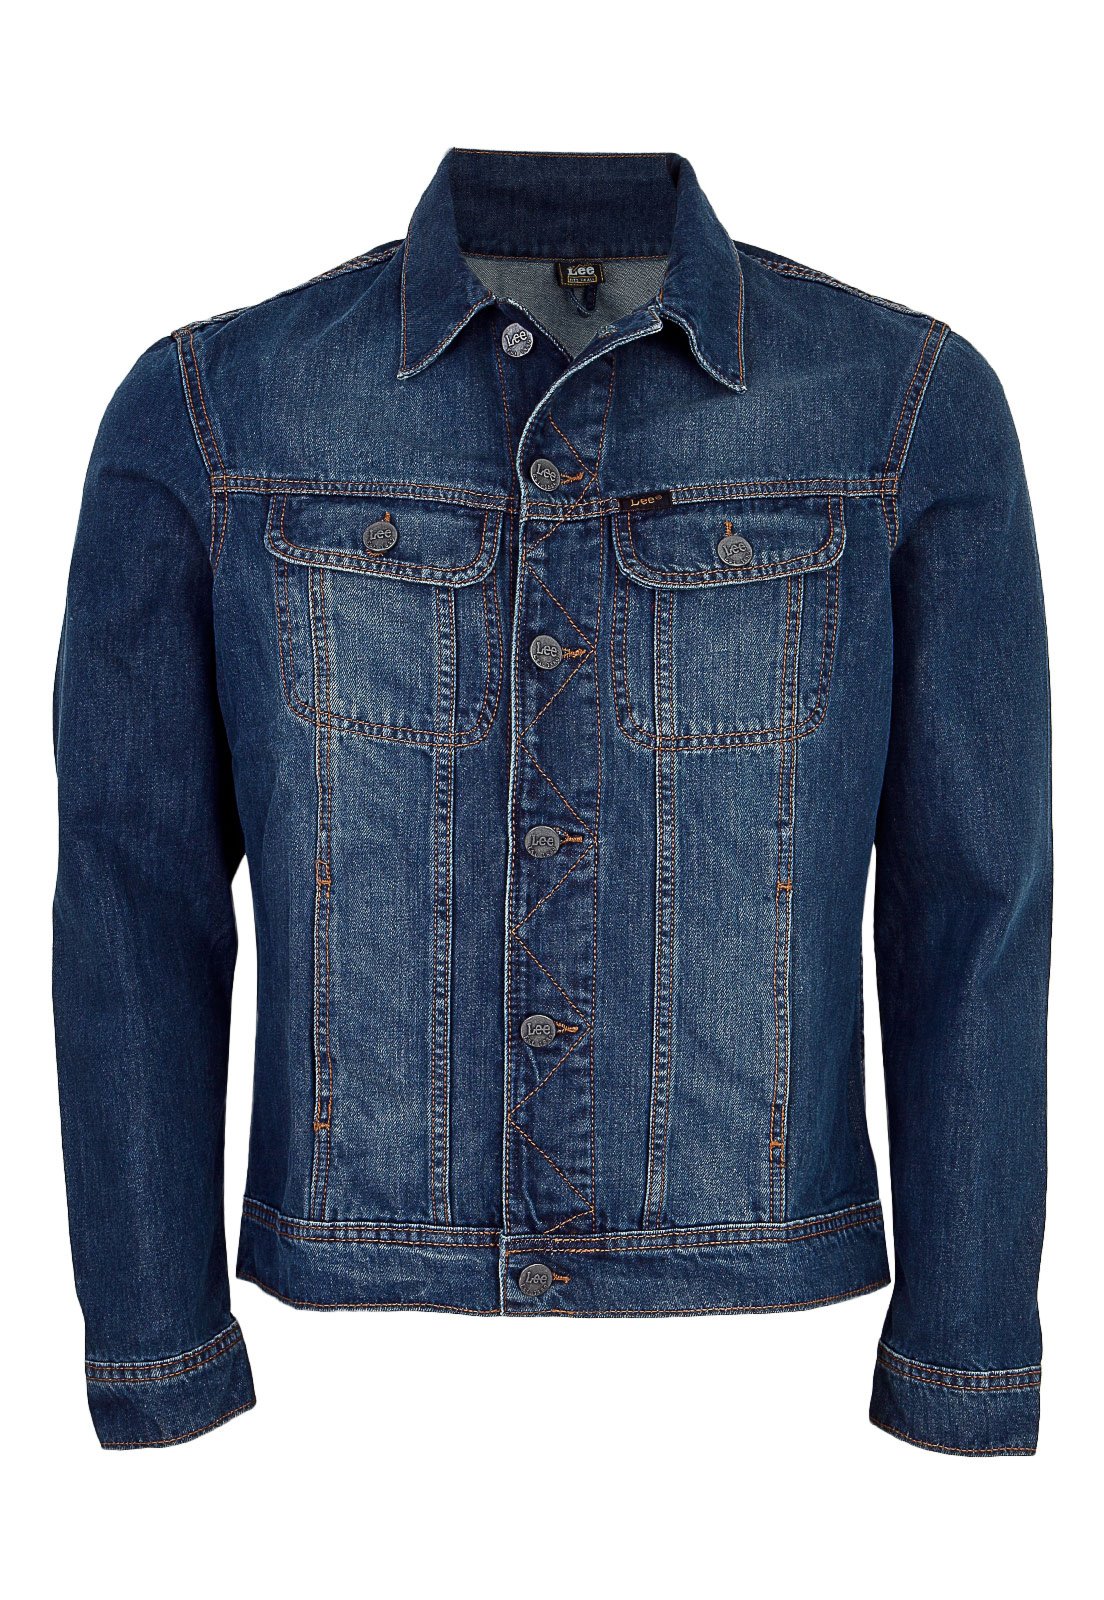 jaqueta jeans tradicional masculina